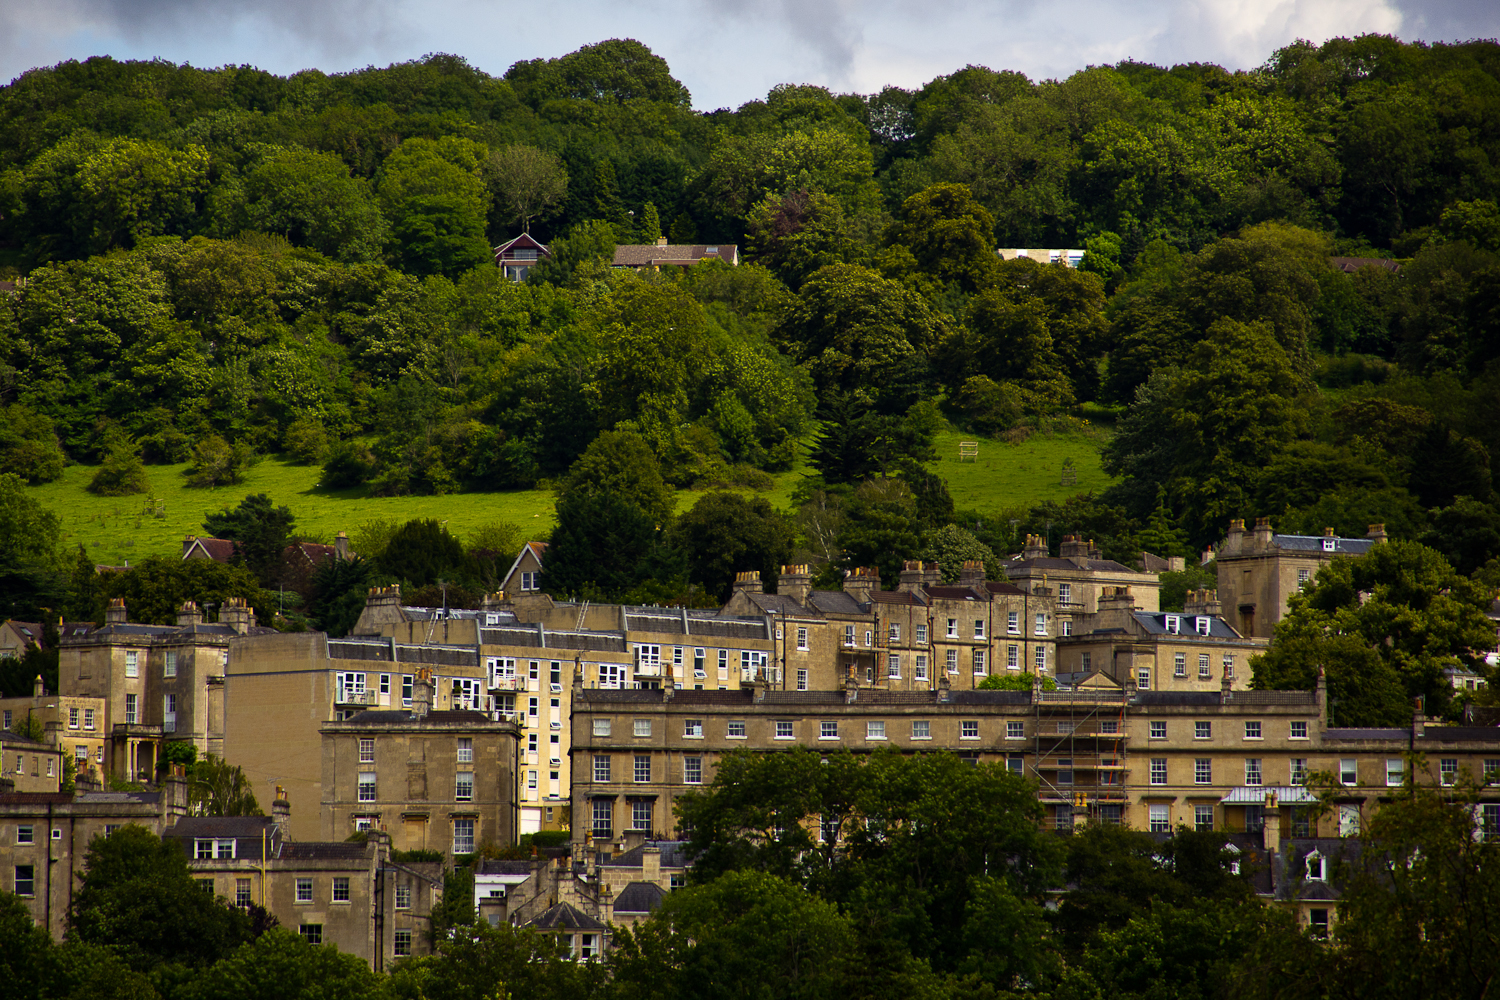 The Hillside of Bath